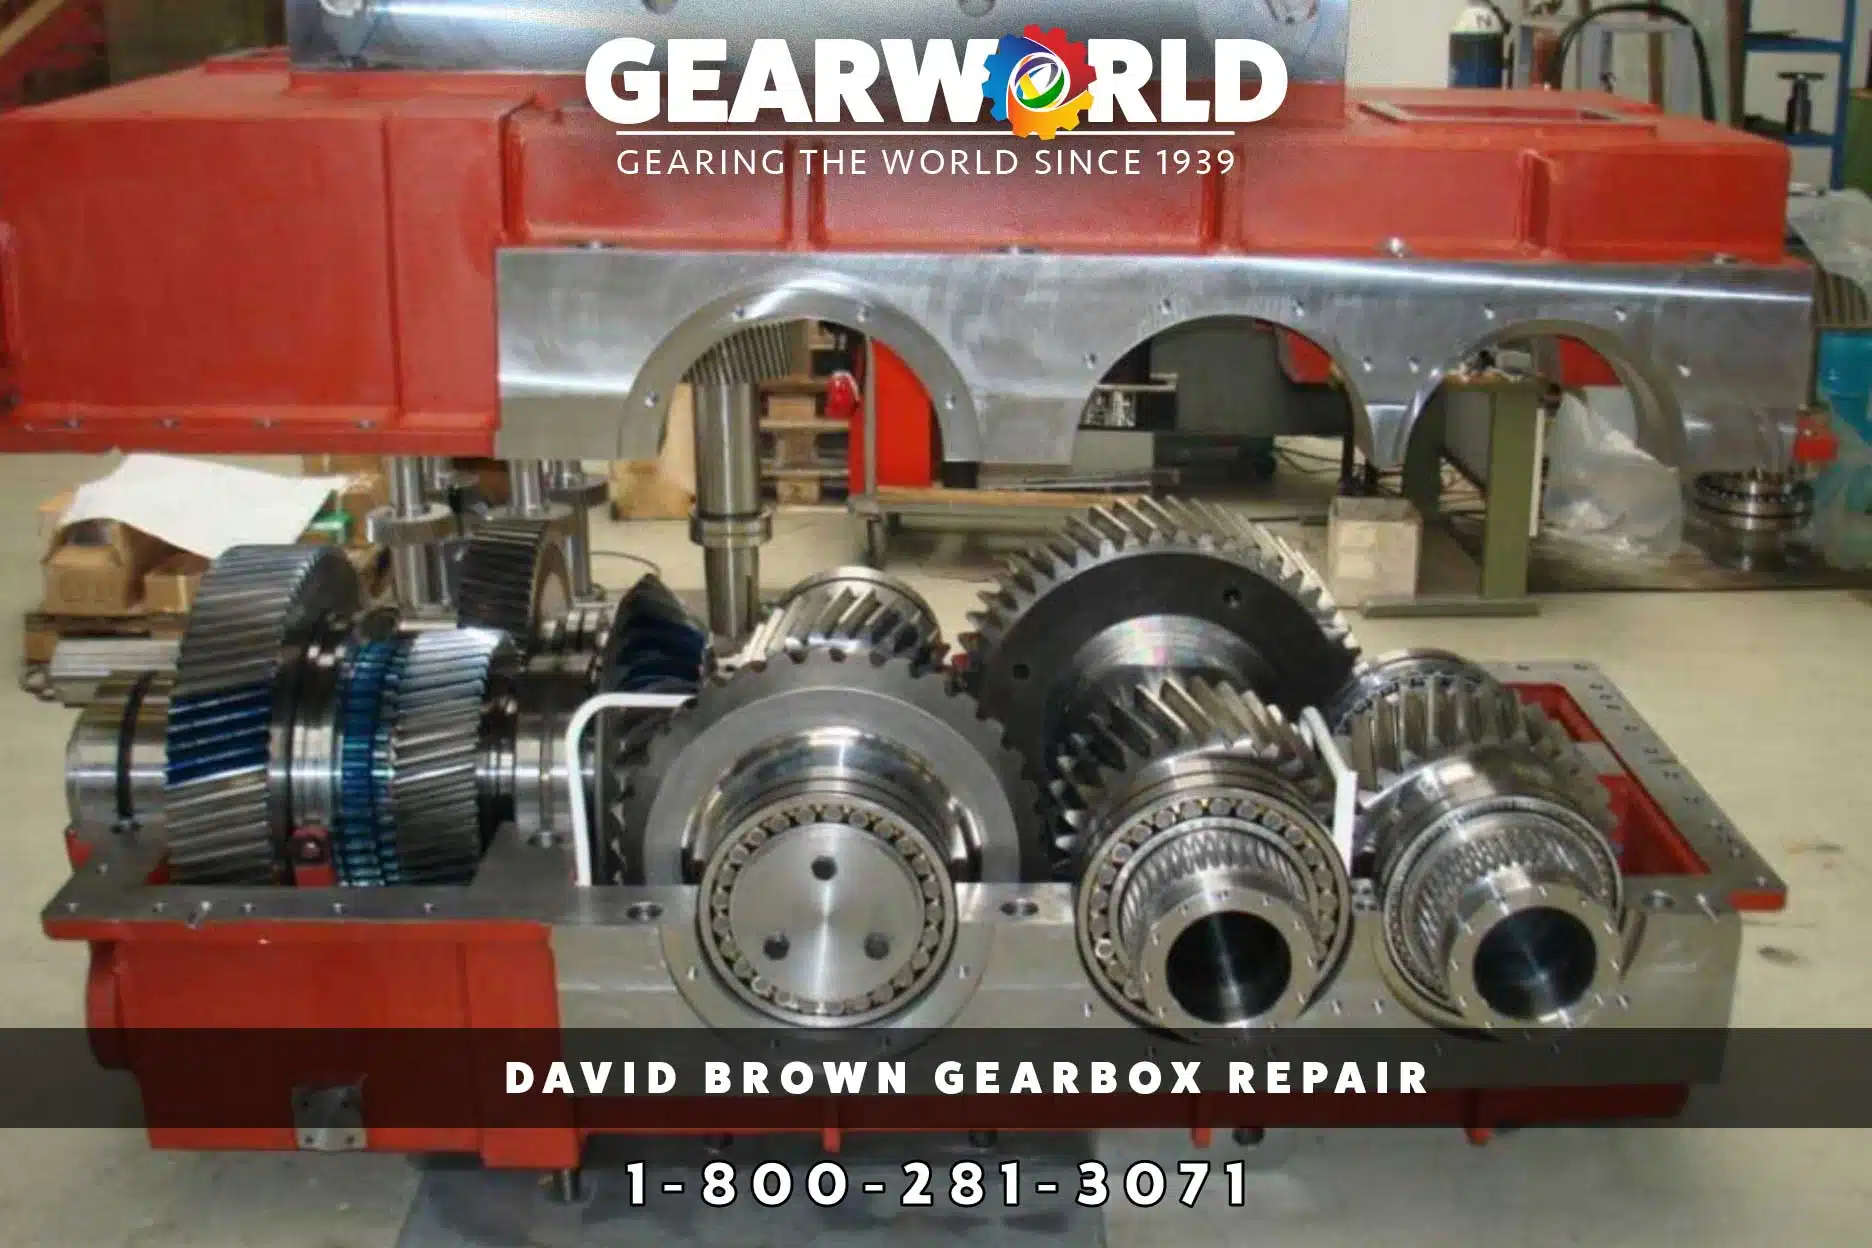 David Brown Gearbox Repair - Call GearWorld